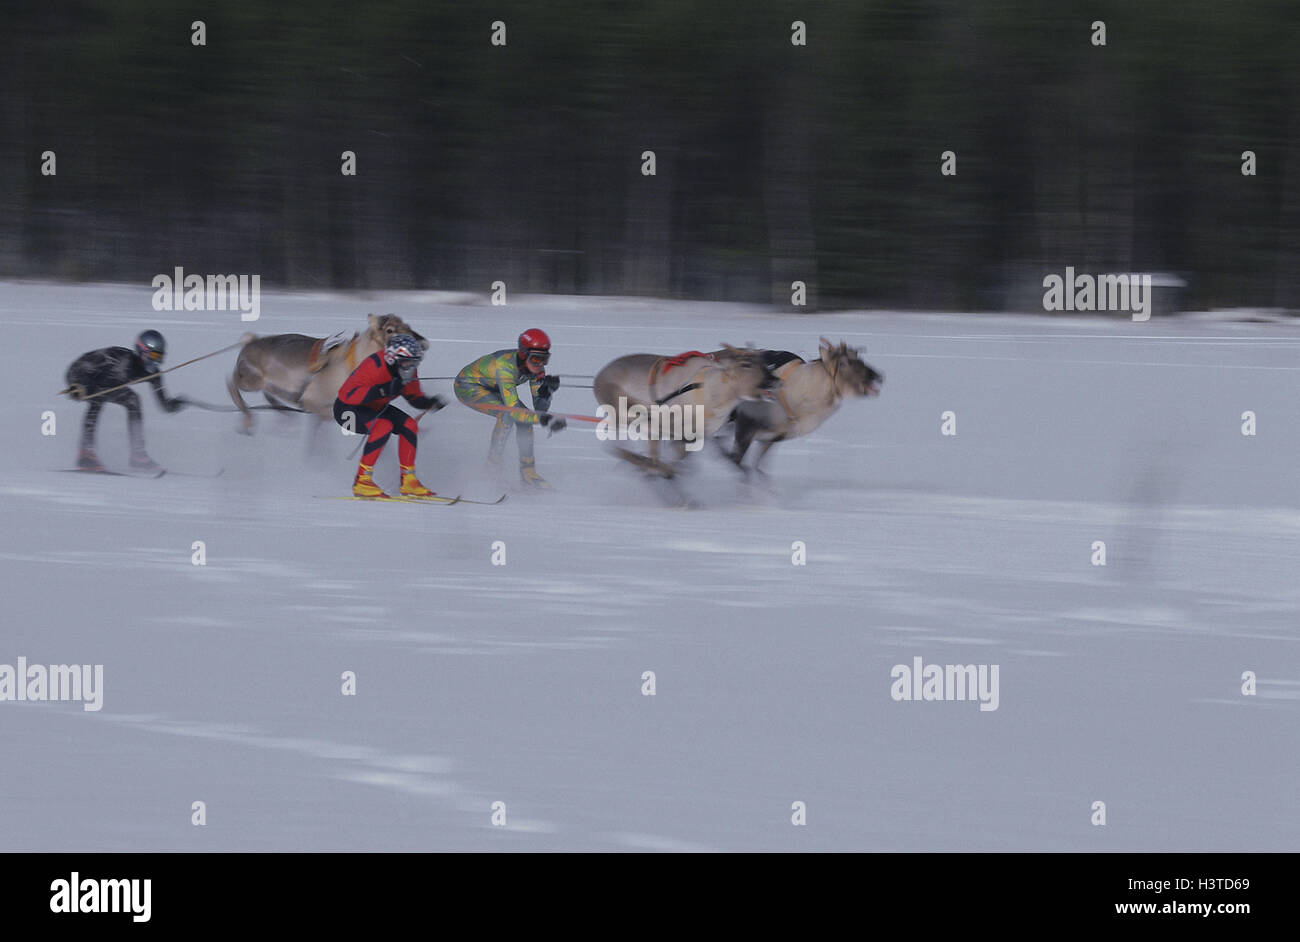 Finland, reindeers, skijoring, pensioner's race, pensioner, people, three, races, speed, victory, fight, run, run, drag, sport, skis, winters, snow, motion blur Stock Photo